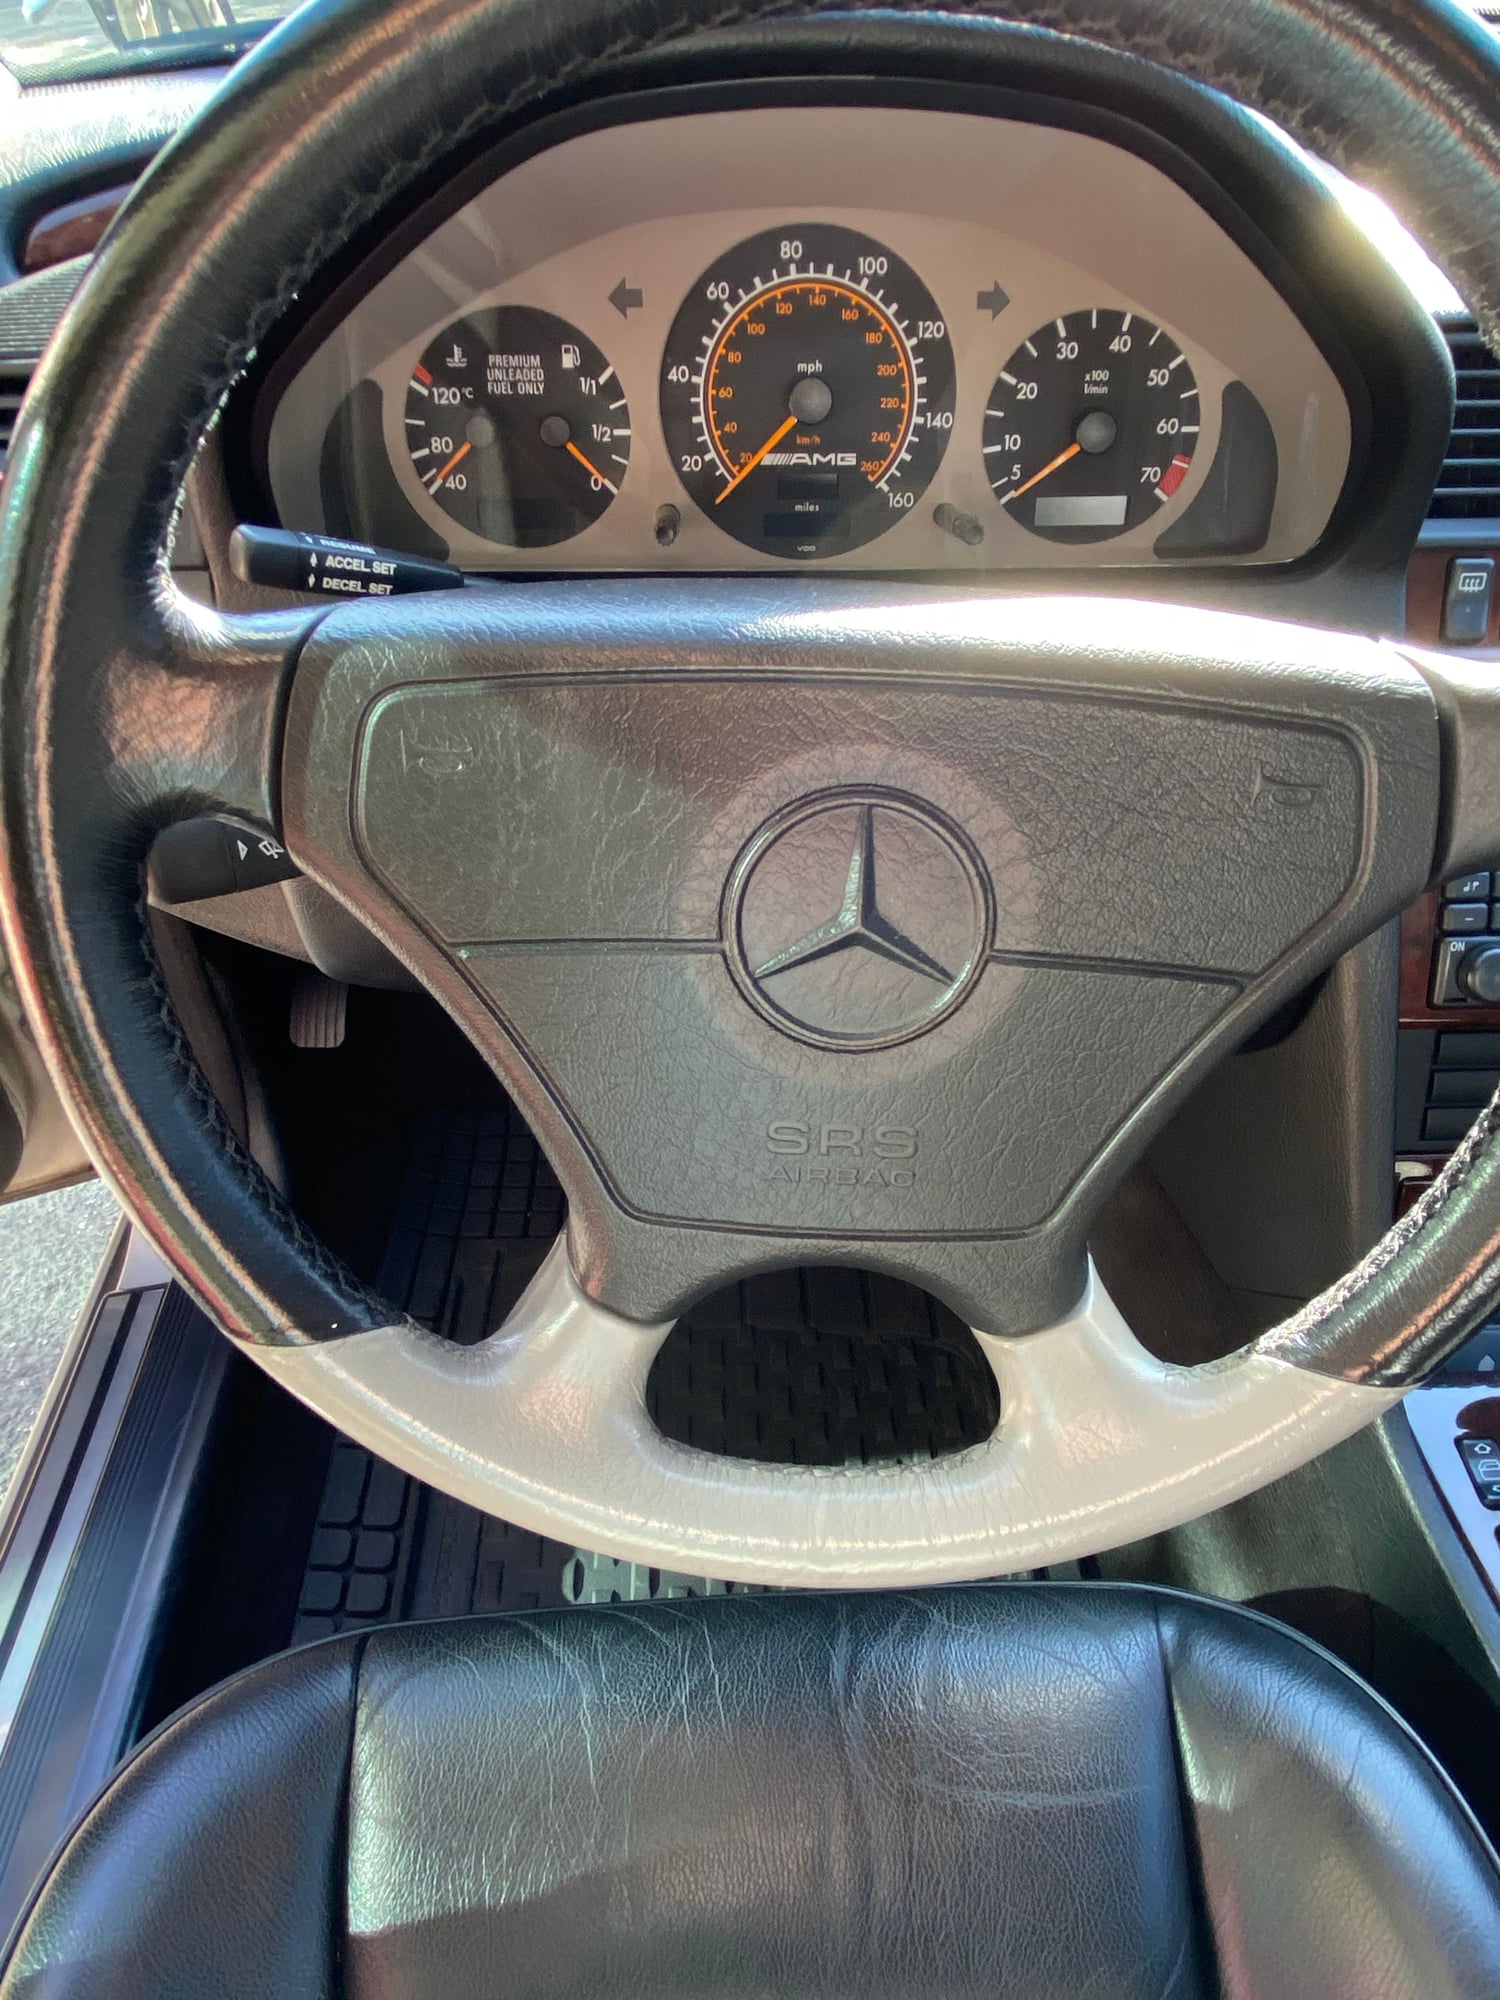 1995 Mercedes-Benz C36 AMG - FS: 1995 Mercedes-Benz C36 AMG - Used - VIN WDBHM36E5SF254054 - 58,000 Miles - 6 cyl - 2WD - Automatic - Sedan - Silver - Scottsdale, AZ 85255, United States